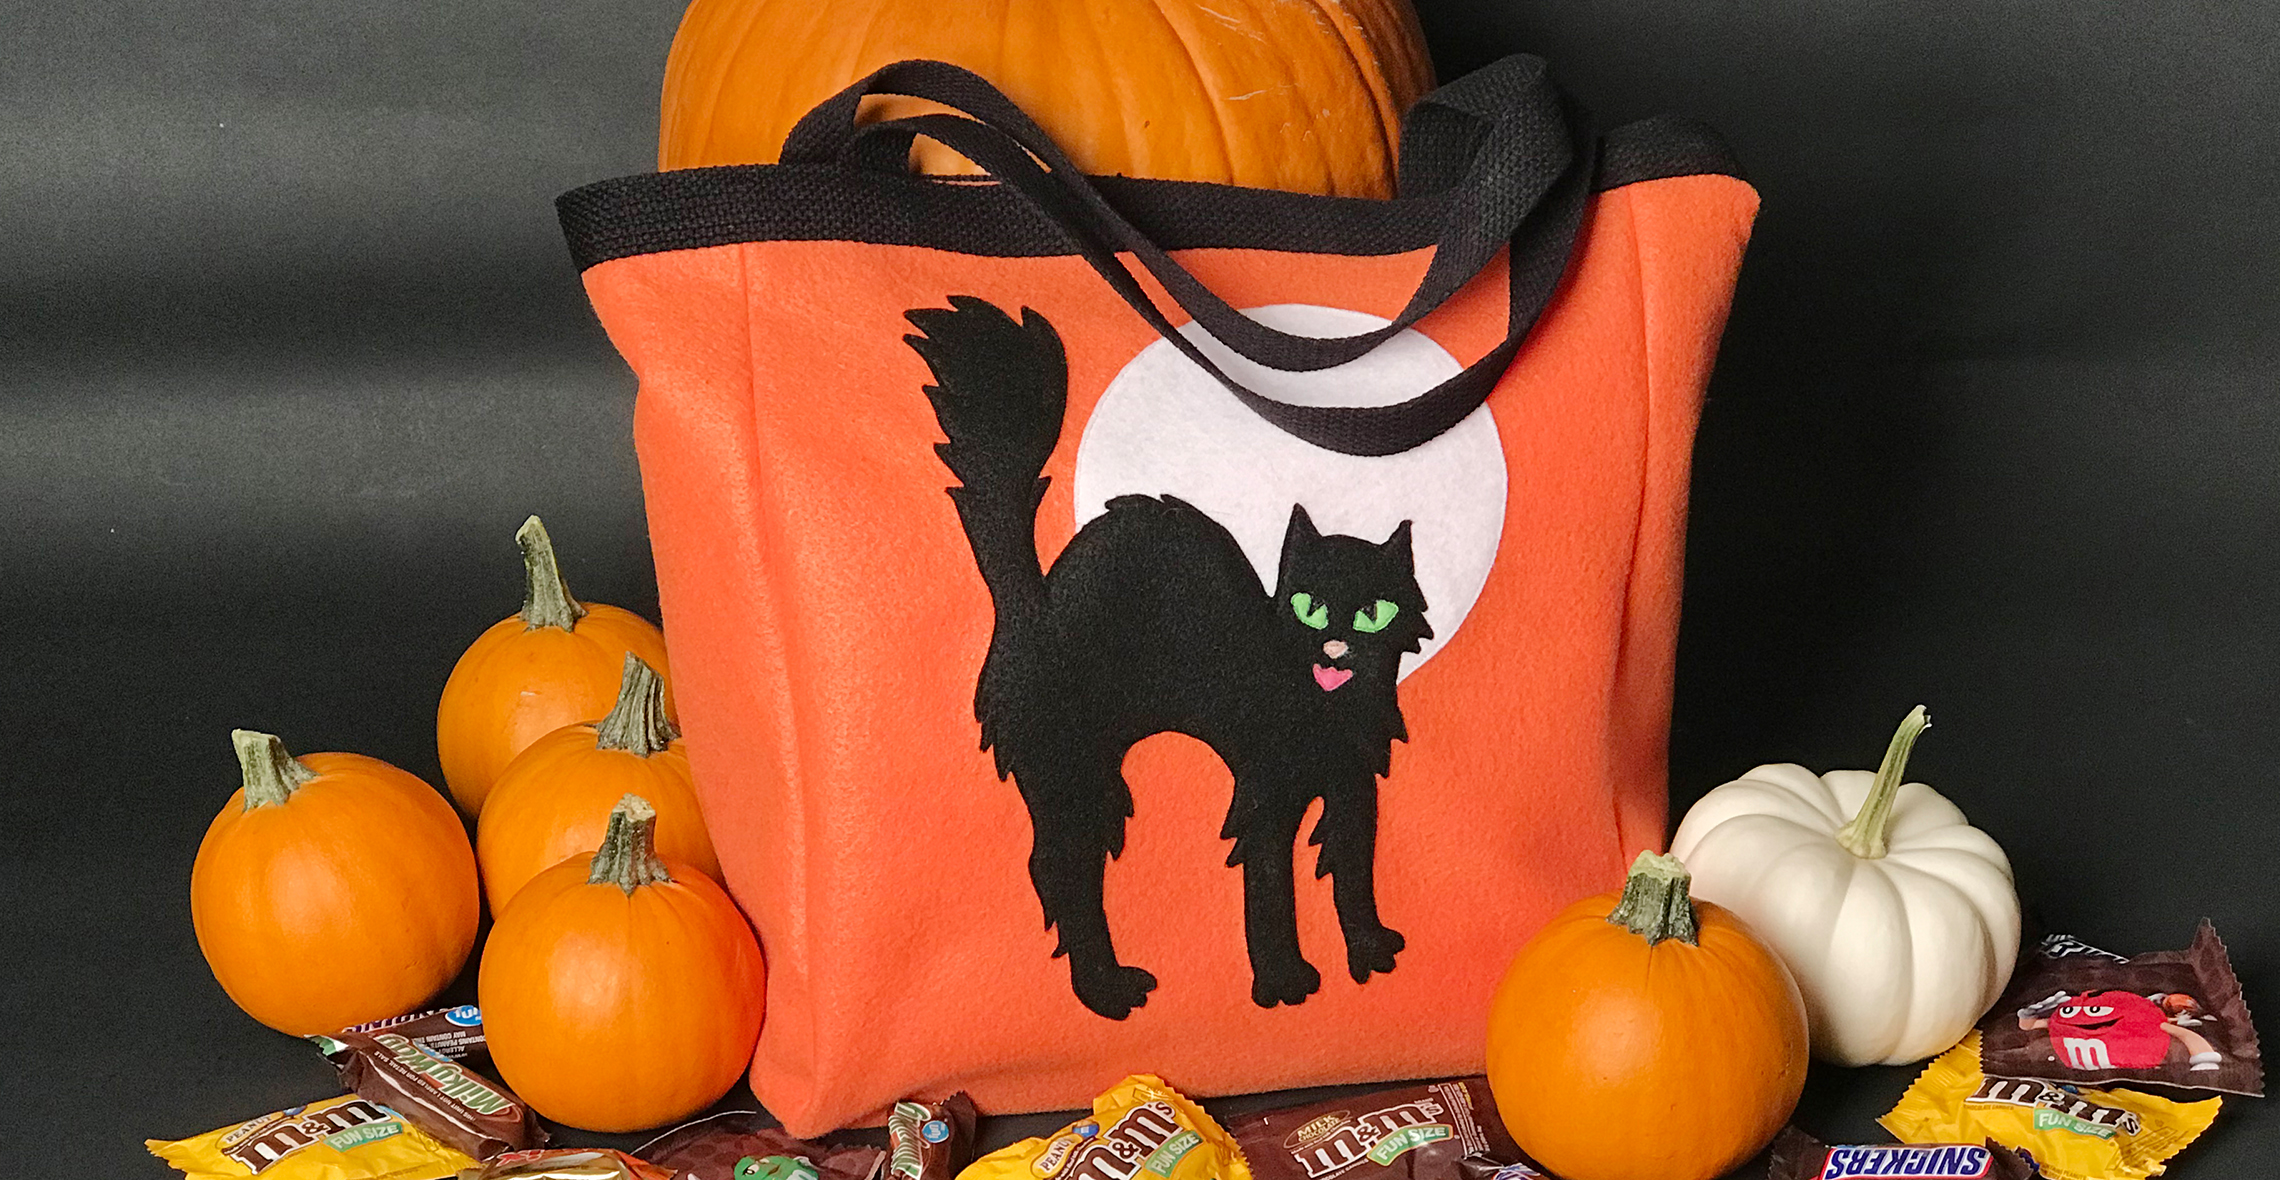 Halloween Treat Bag